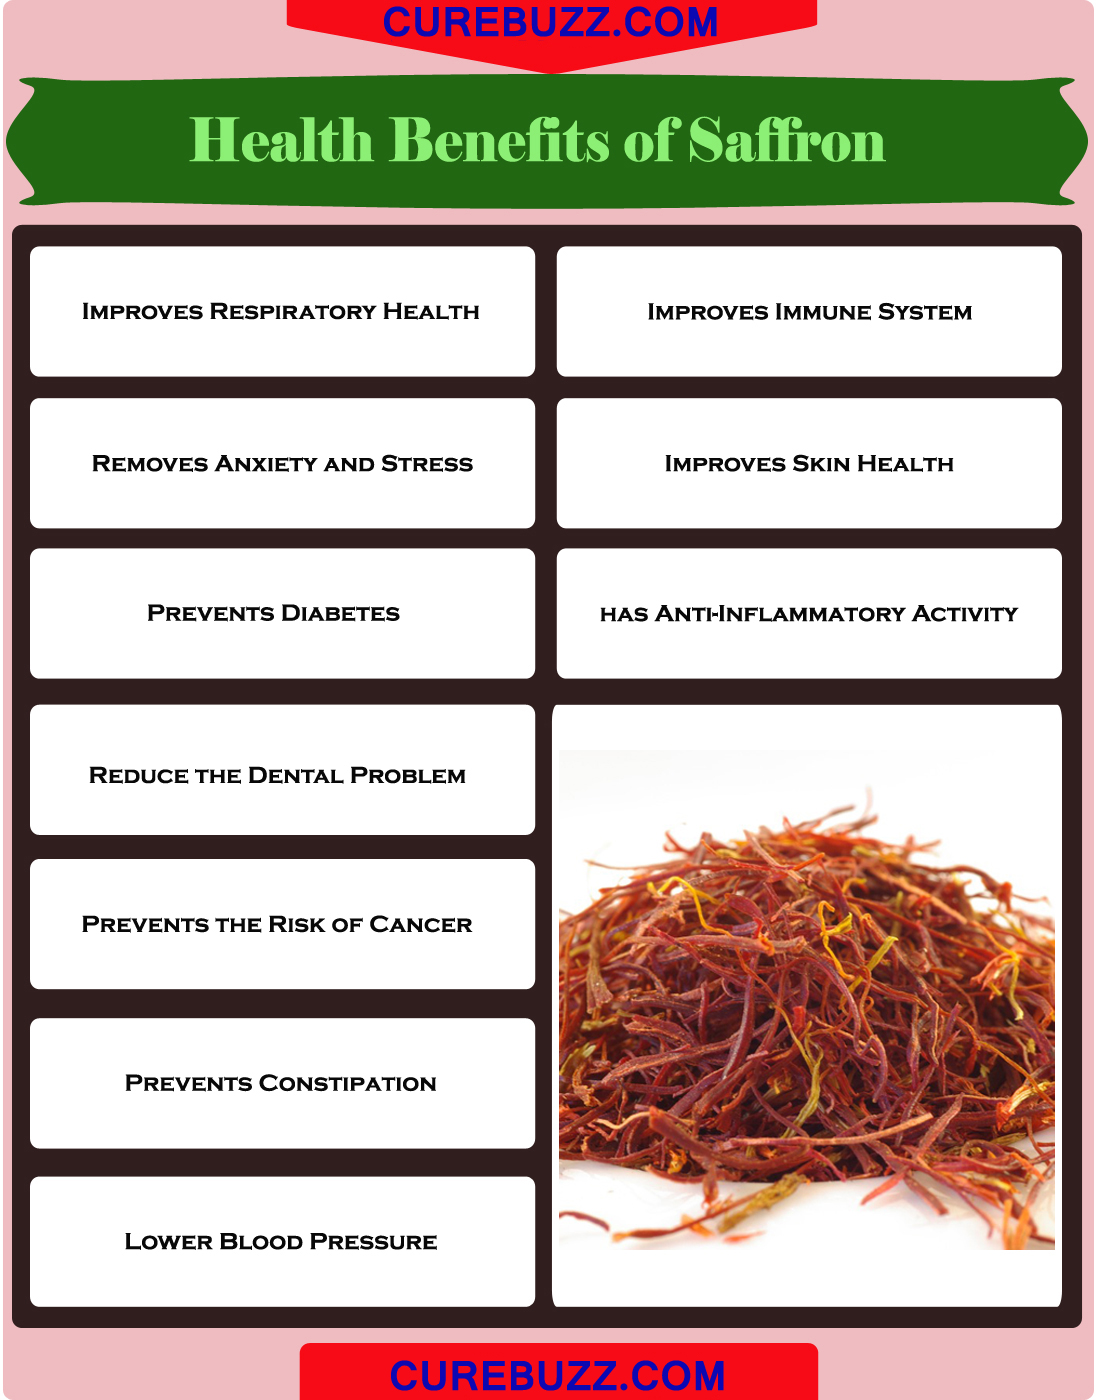 10 health benefits of saffron : curebuzz